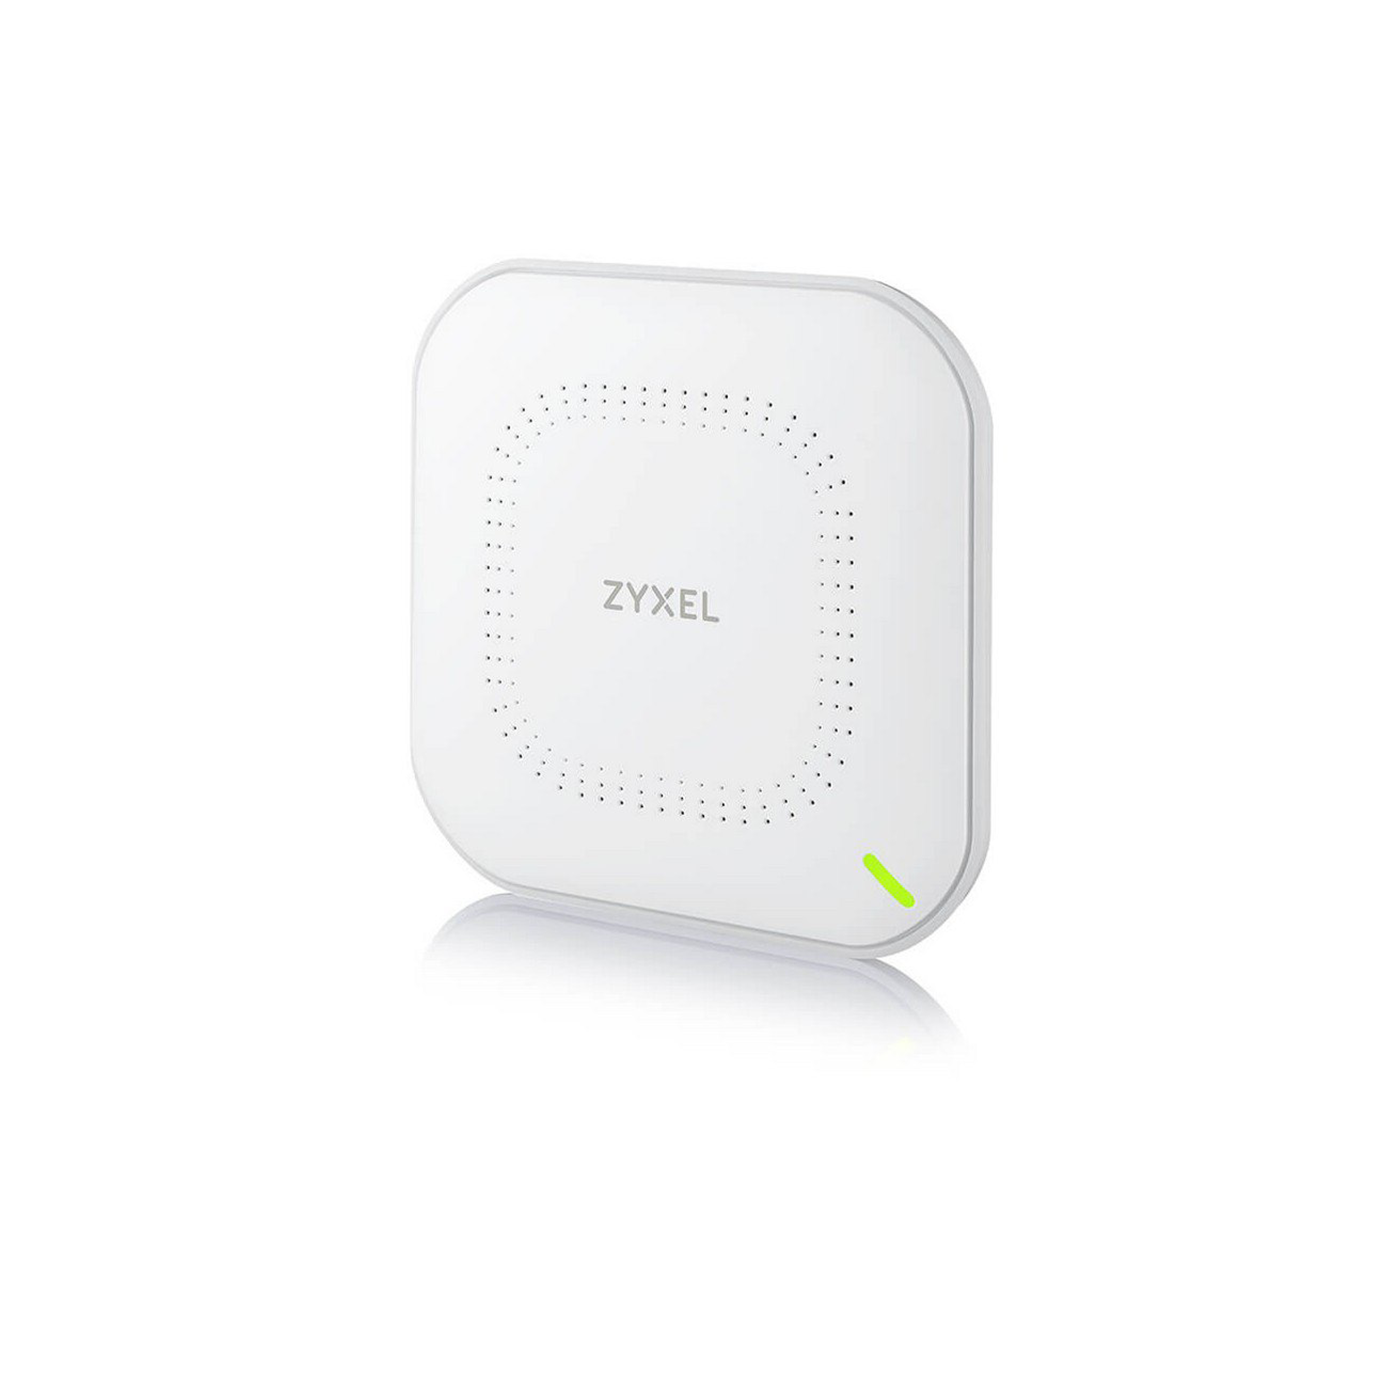  Zyxel Access Point Wireless 